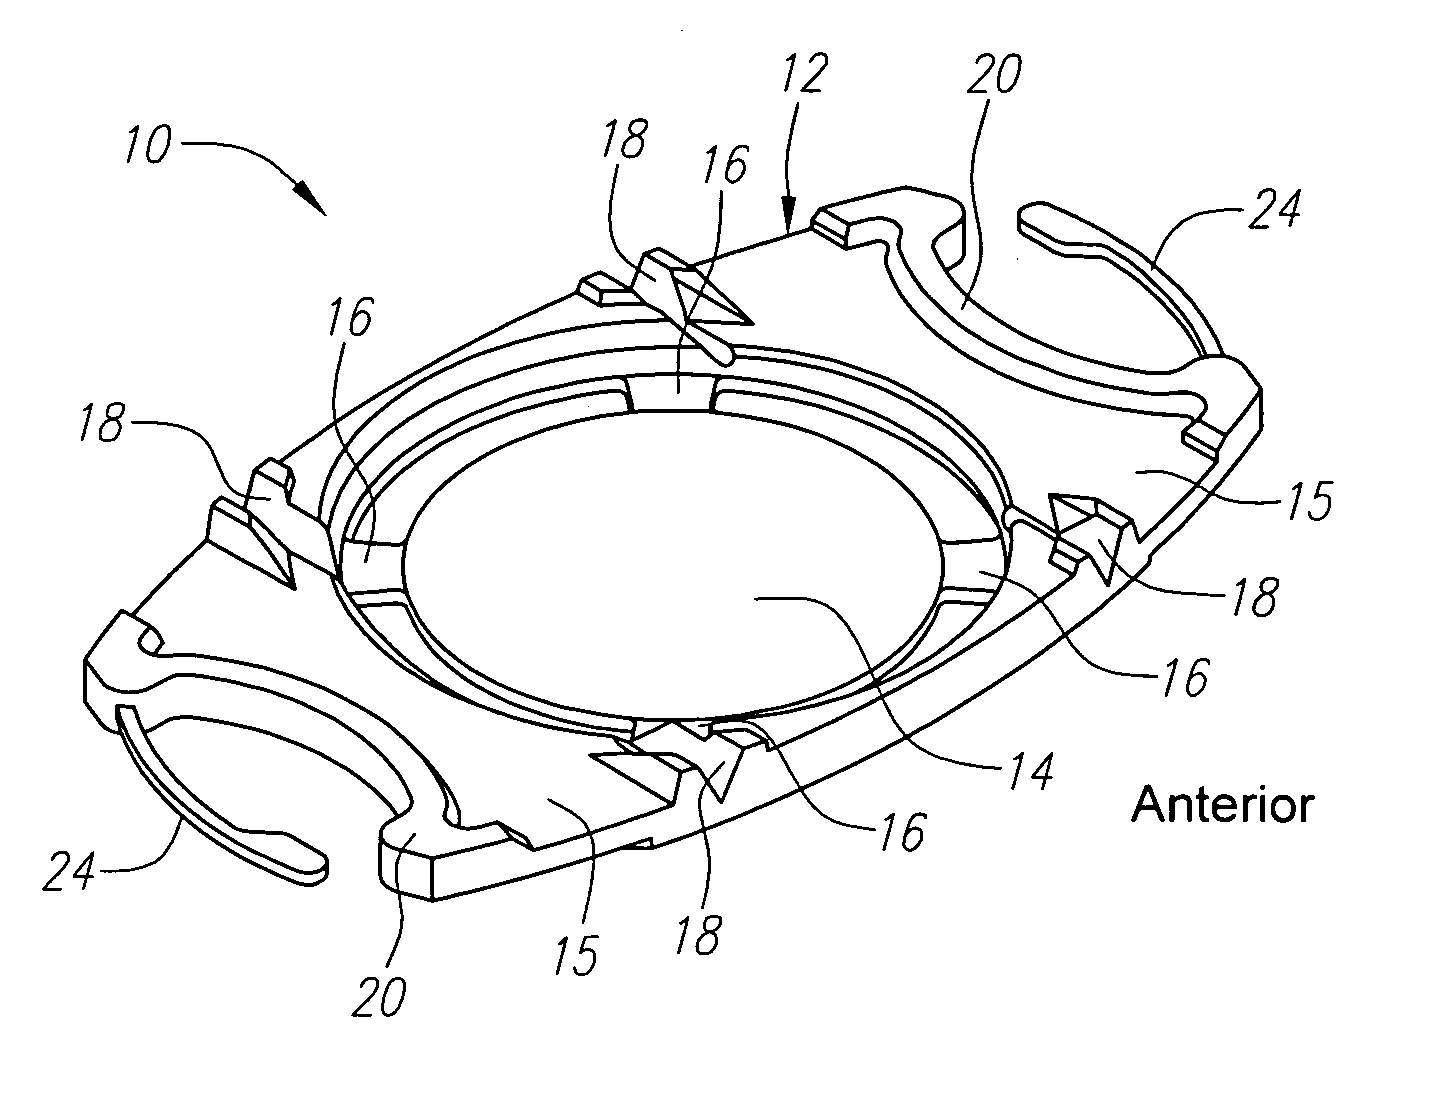 Floating optic accommodating intraocular lens